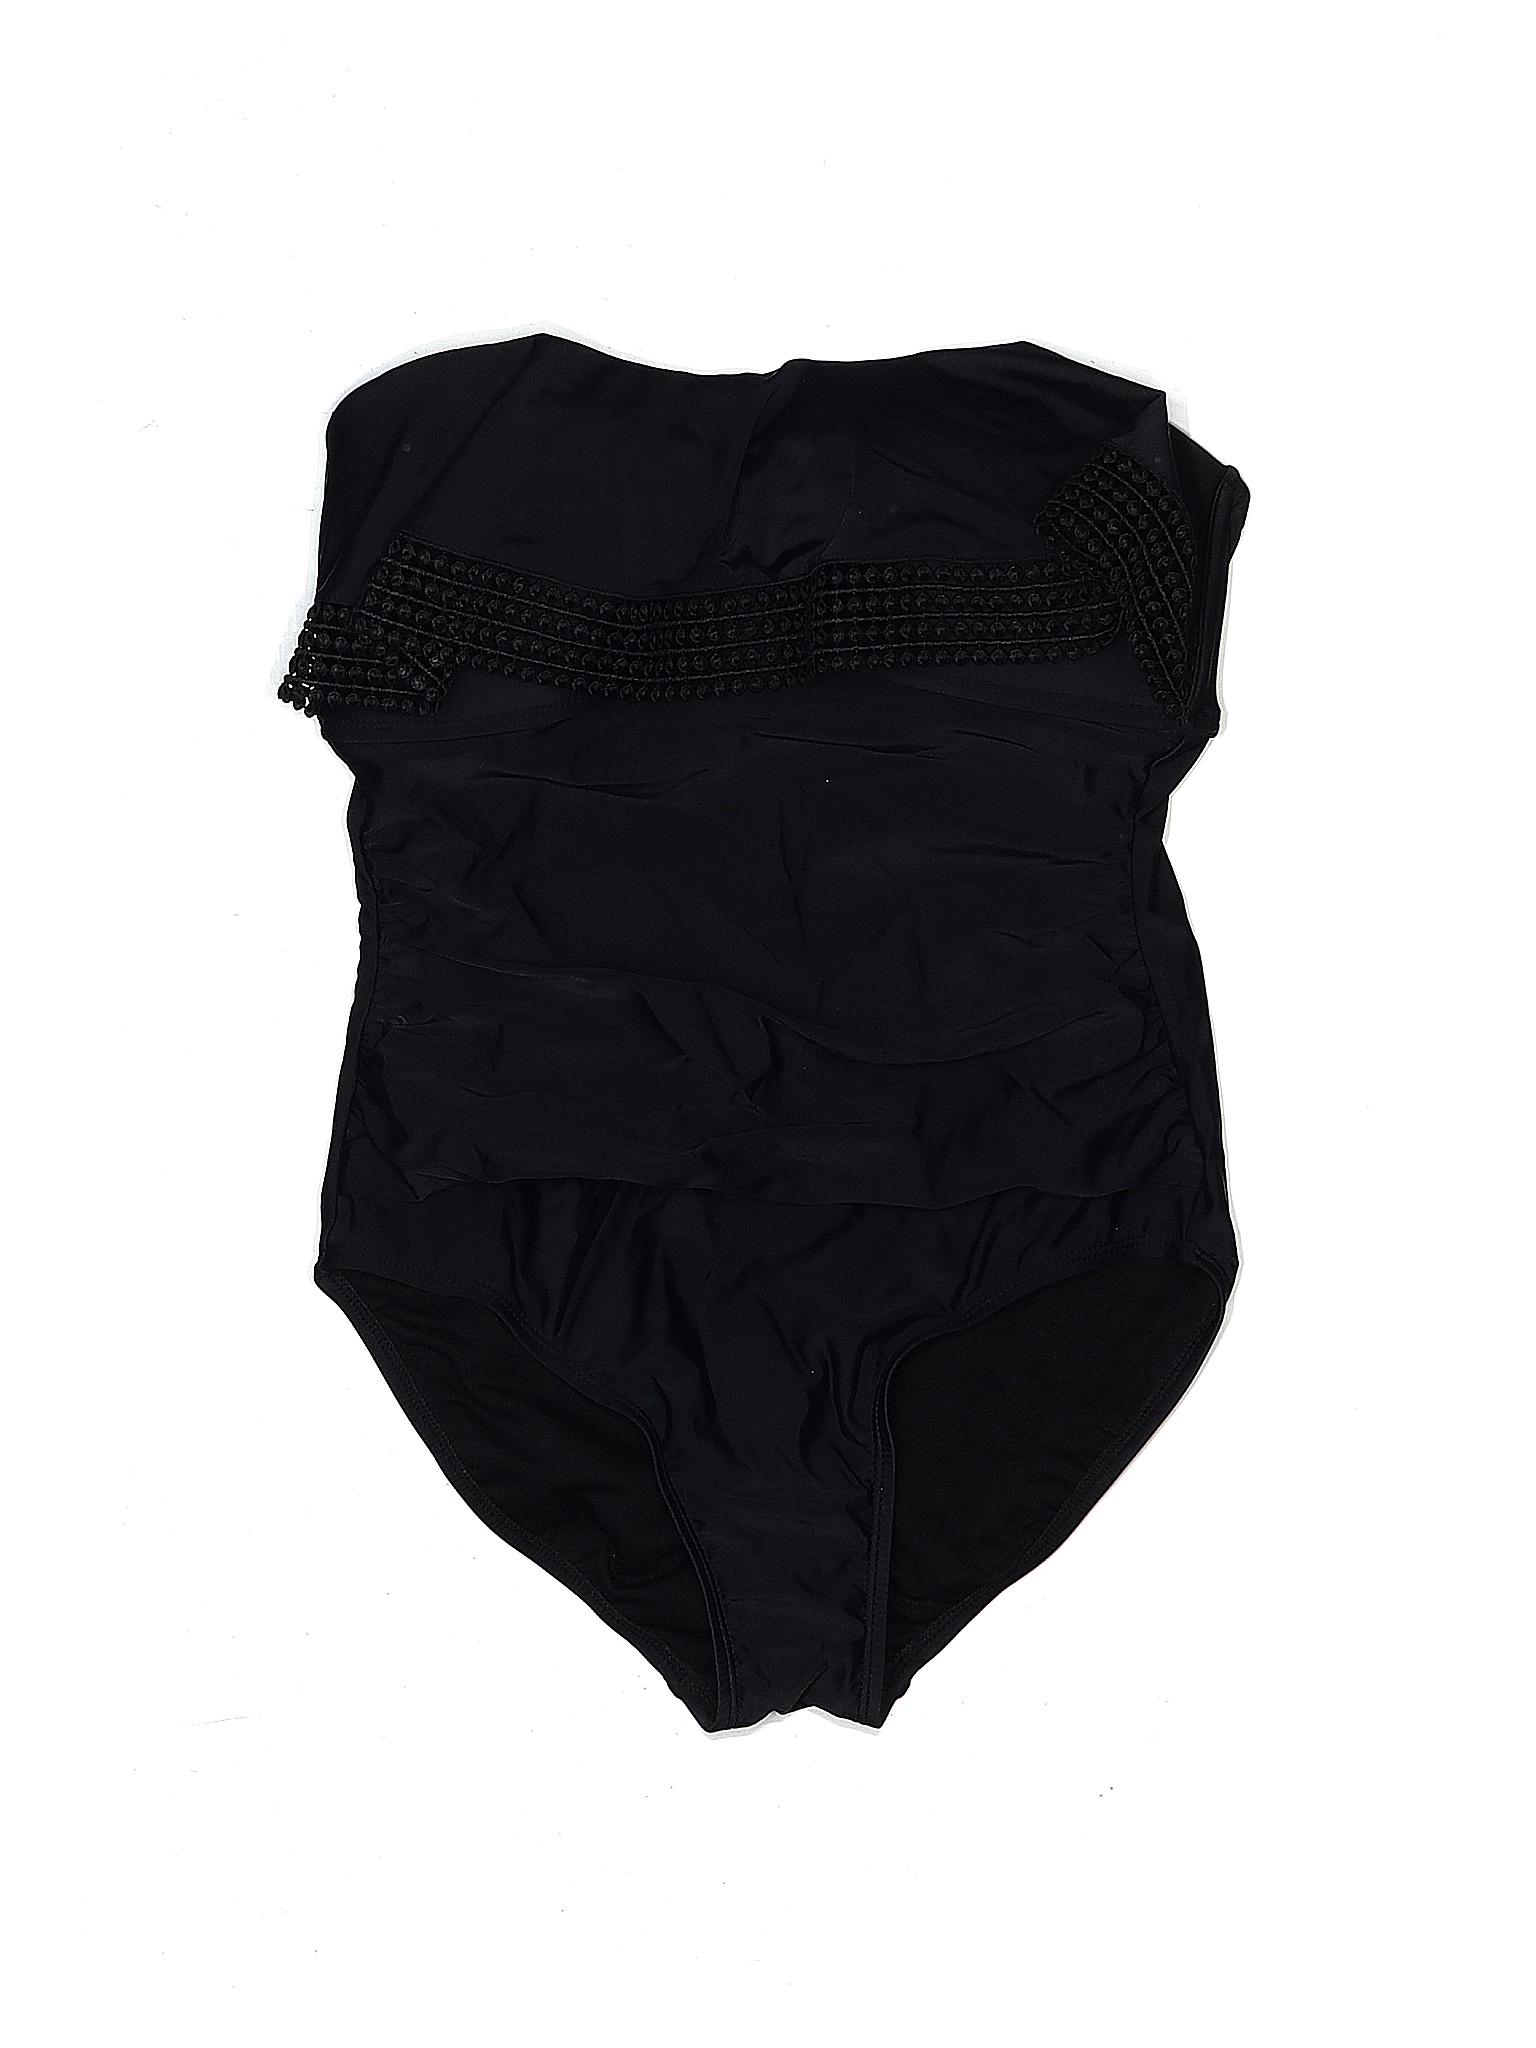 Kona Sol Solid Black One Piece Swimsuit Size M - 61% off | thredUP